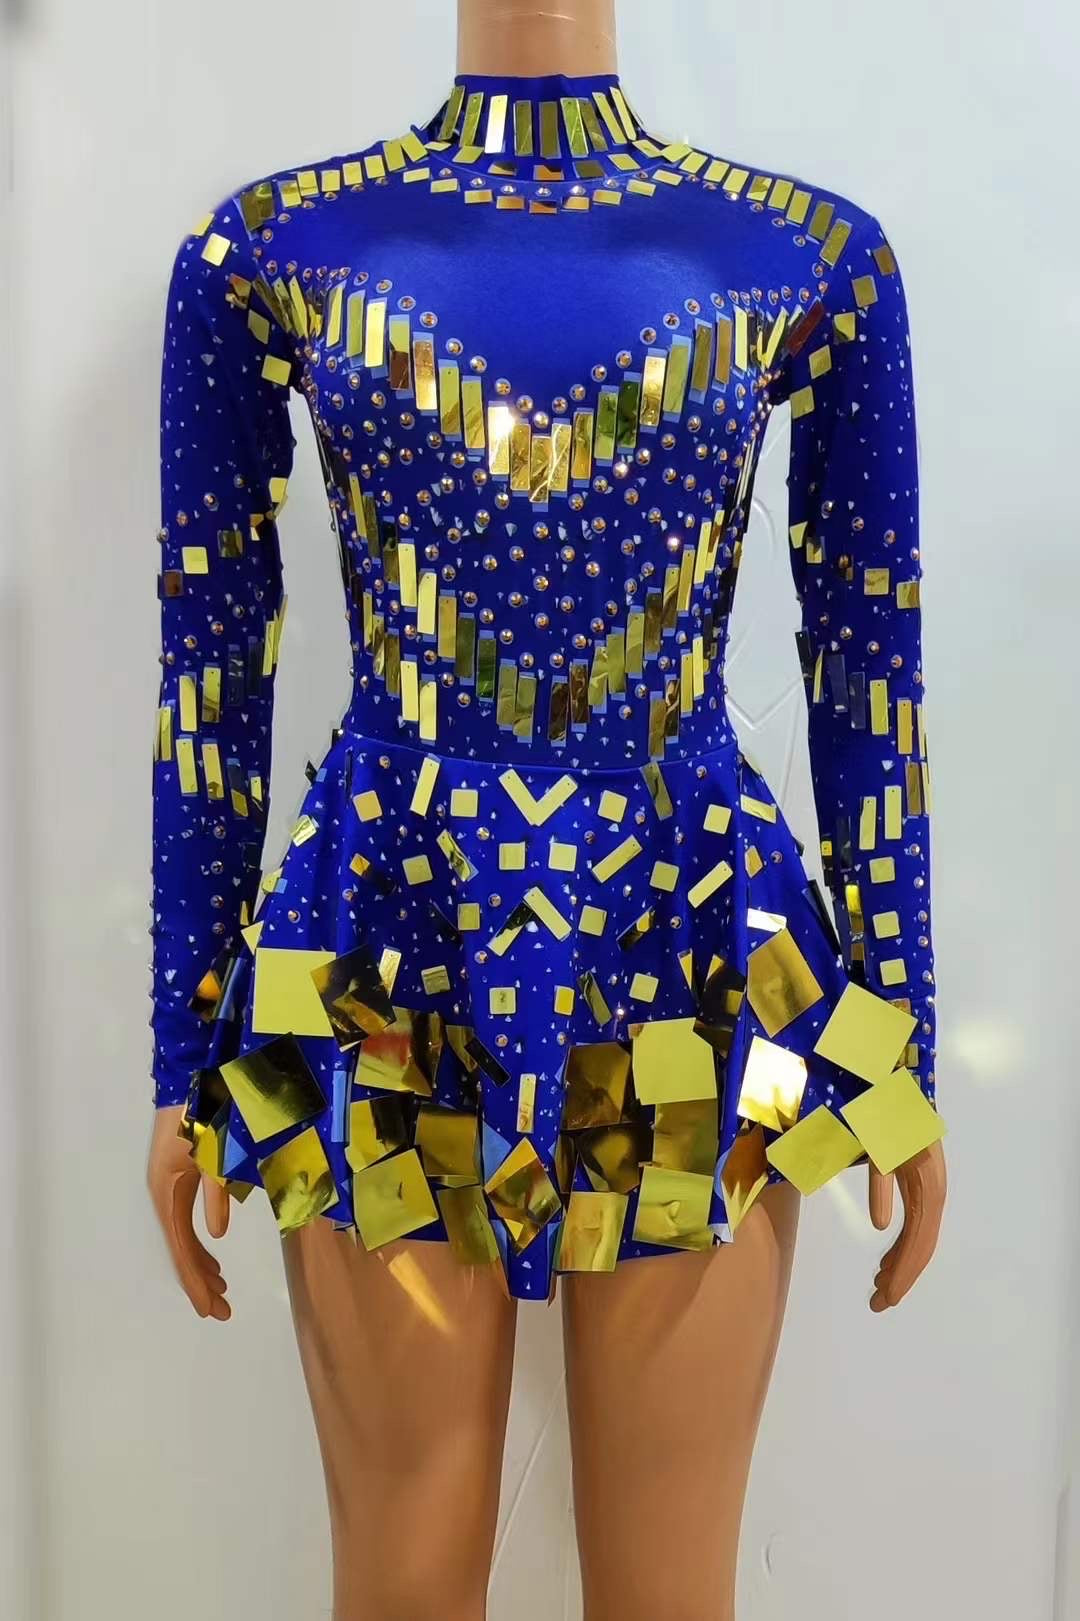 Disco Blue and Gold remix dress